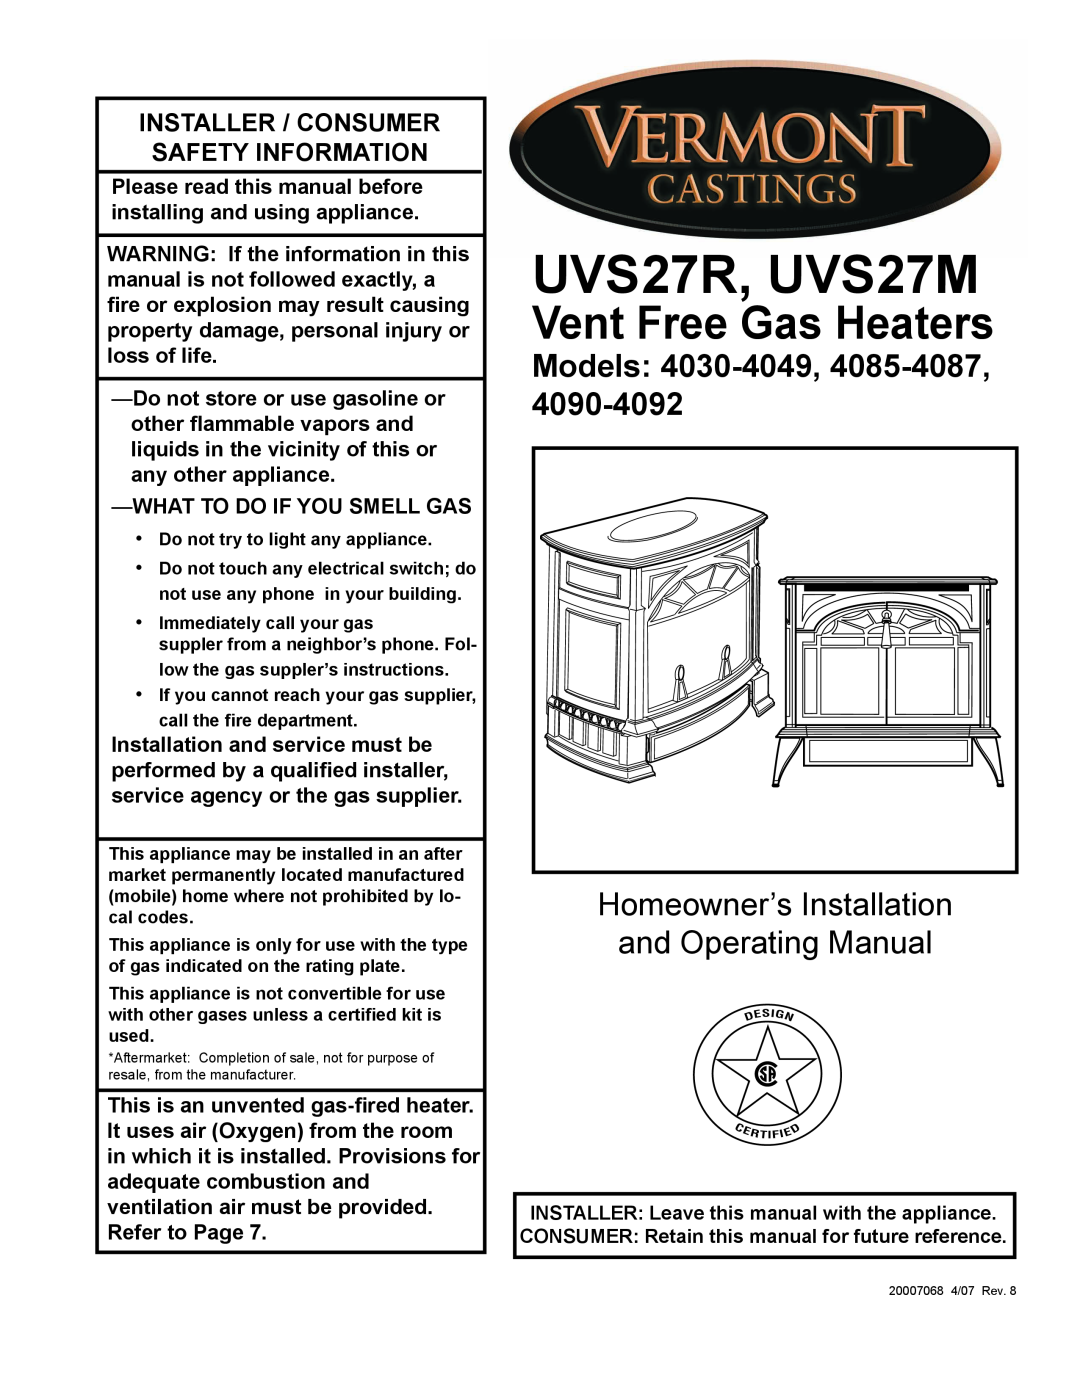 Vermont Casting 4030 - 4049 manual Models: 4030-4049, 4090-4092, UVS27R, UVS27M, Vent Free Gas Heaters 